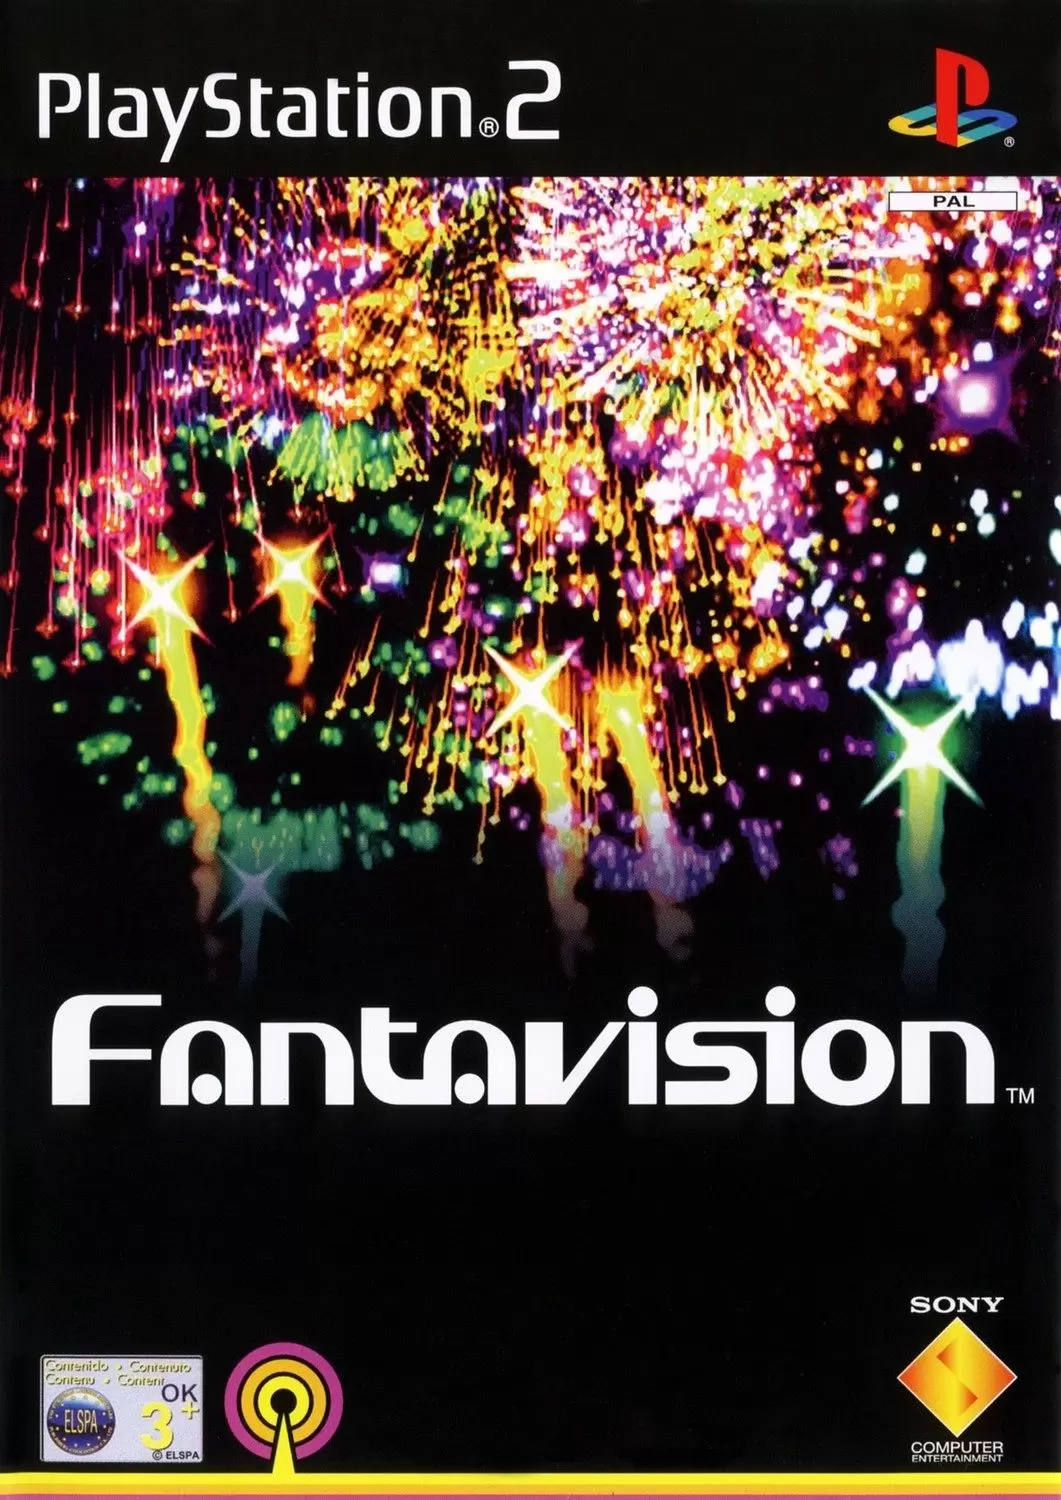 PS2 Games - Fantavision